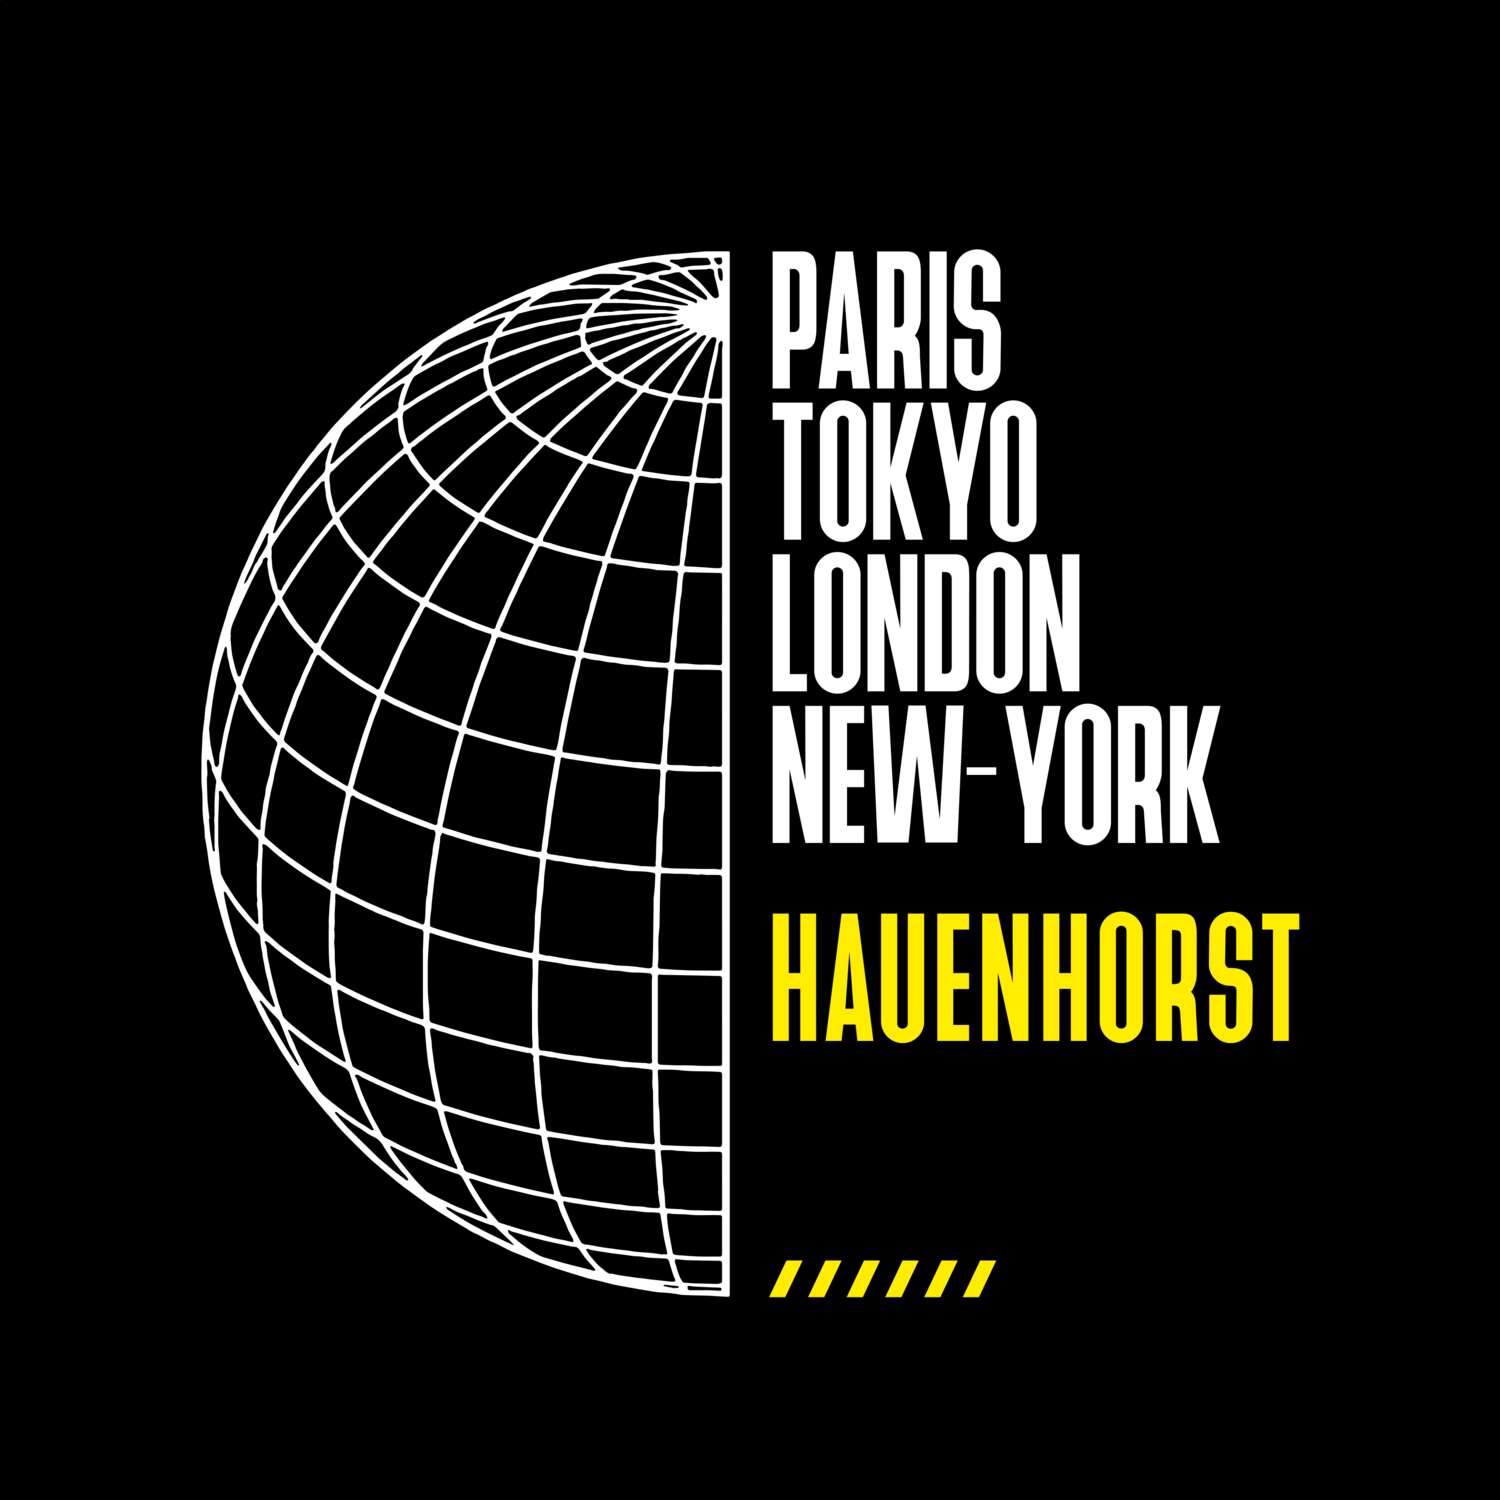 Hauenhorst T-Shirt »Paris Tokyo London«